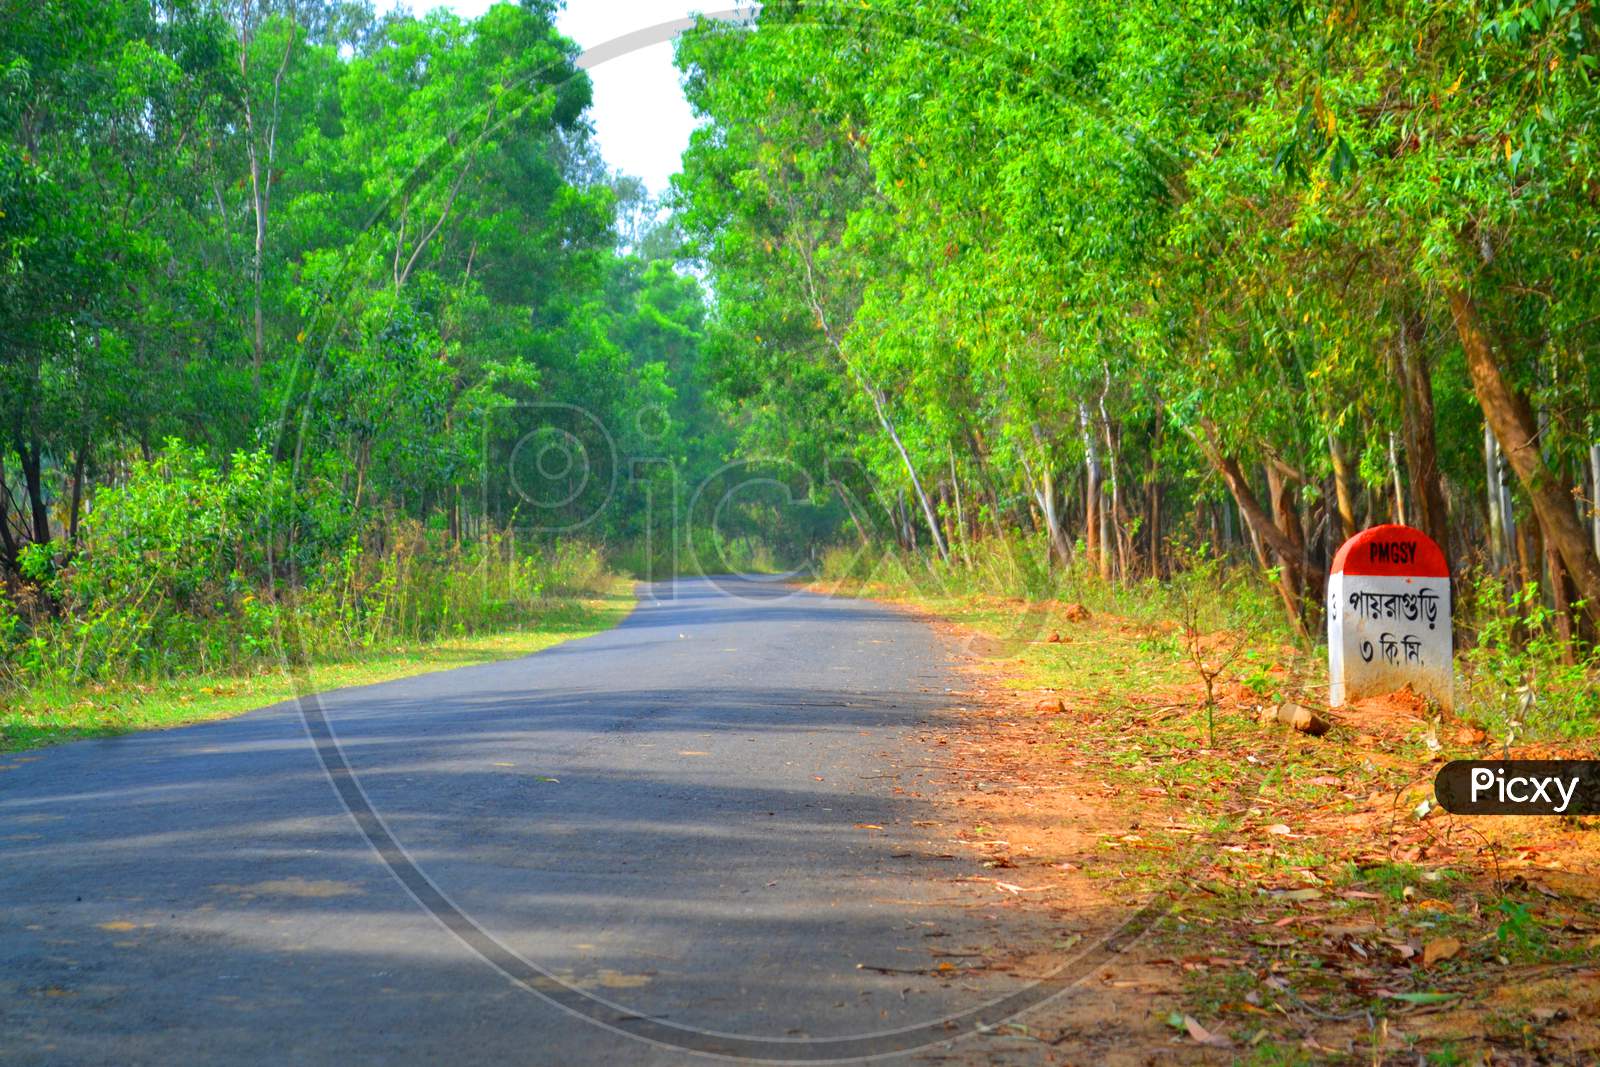 Village Road along Jungle Mahal